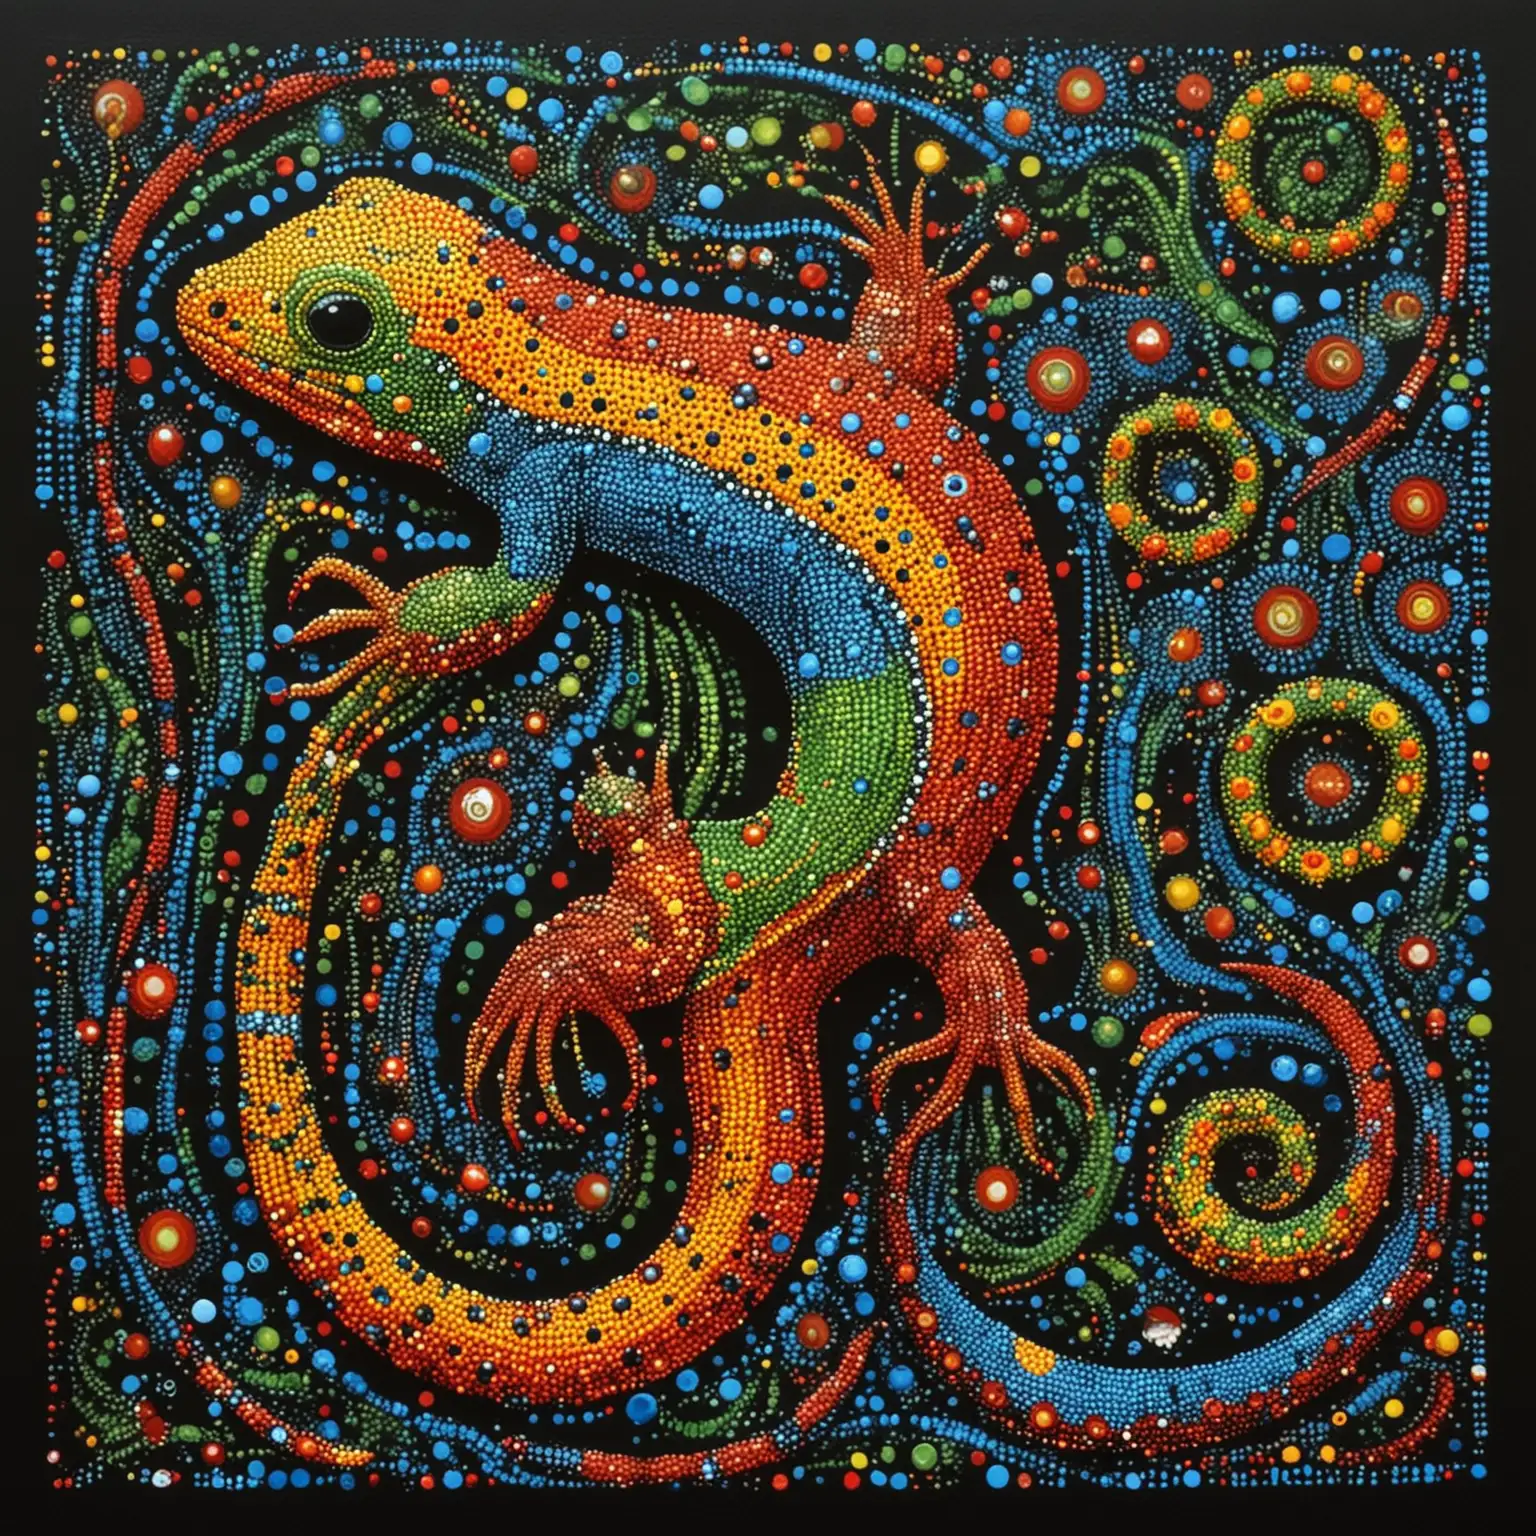 Aboriginal Dot Art of Salamander in Green Yellow Blue Red and Black